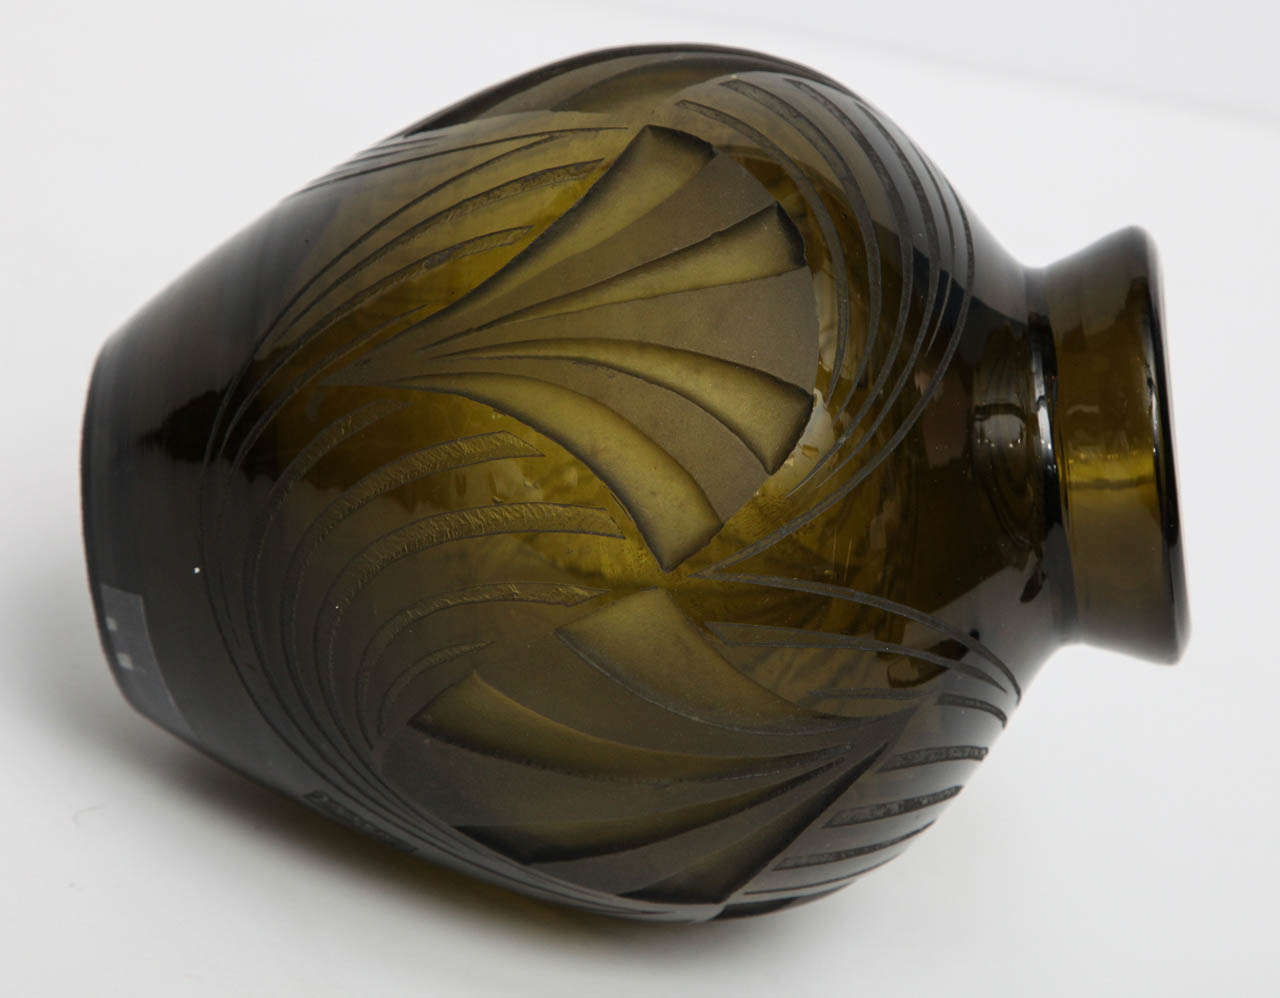 Art Deco Legras, Acid-etched glass vase, France, c. 1920